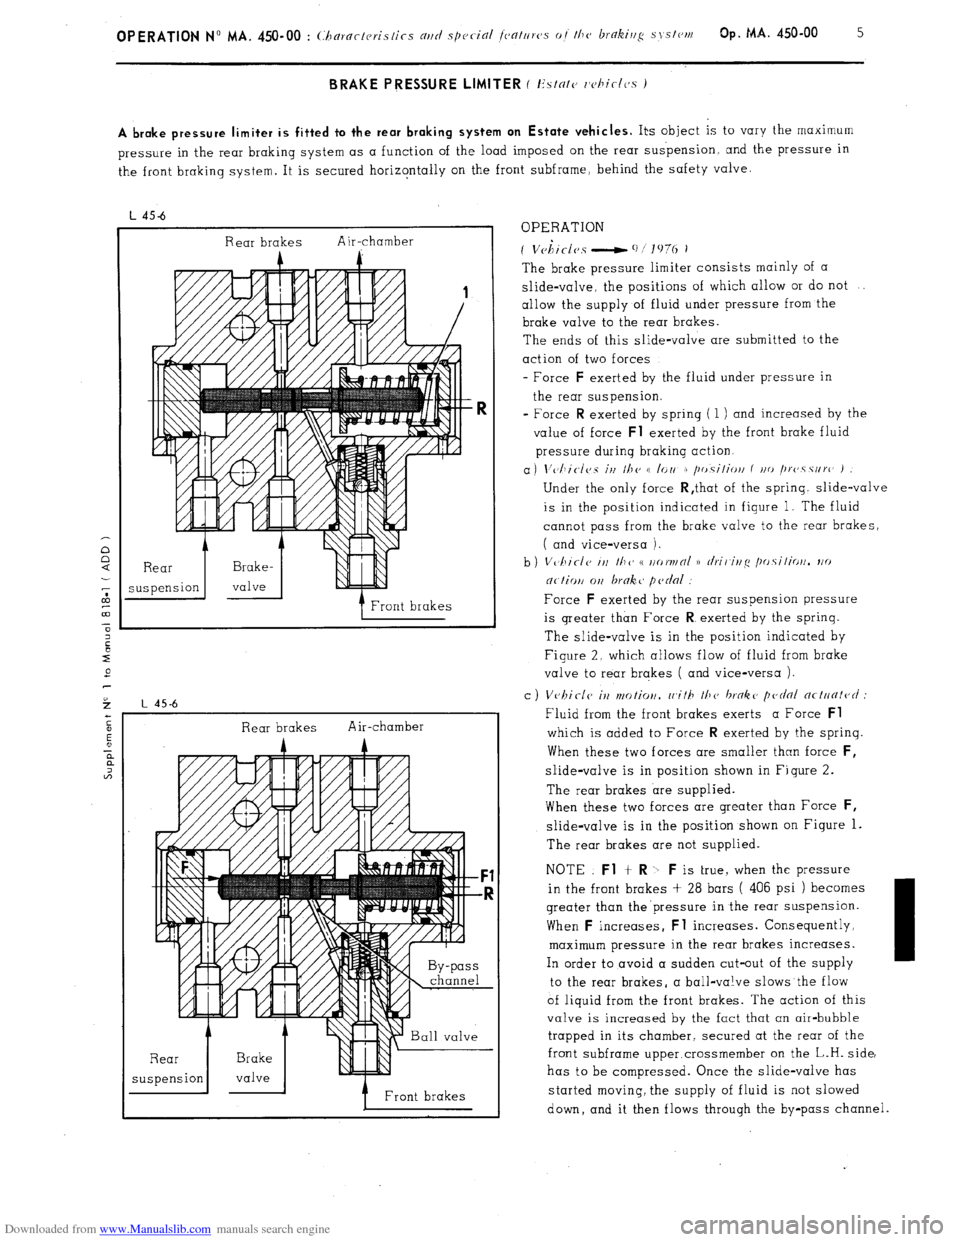 Citroen CX 1982 1.G Workshop Manual Downloaded from www.Manualslib.com manuals search engine OPERATION No MA. 450-00 : Ch nrnclcrislics ortd sp~~c-i~l (c~c~trlrc>s 01 the hokiug S SI~IN Op. MA. 450.00 5 
A brake pressure limiter is fitt